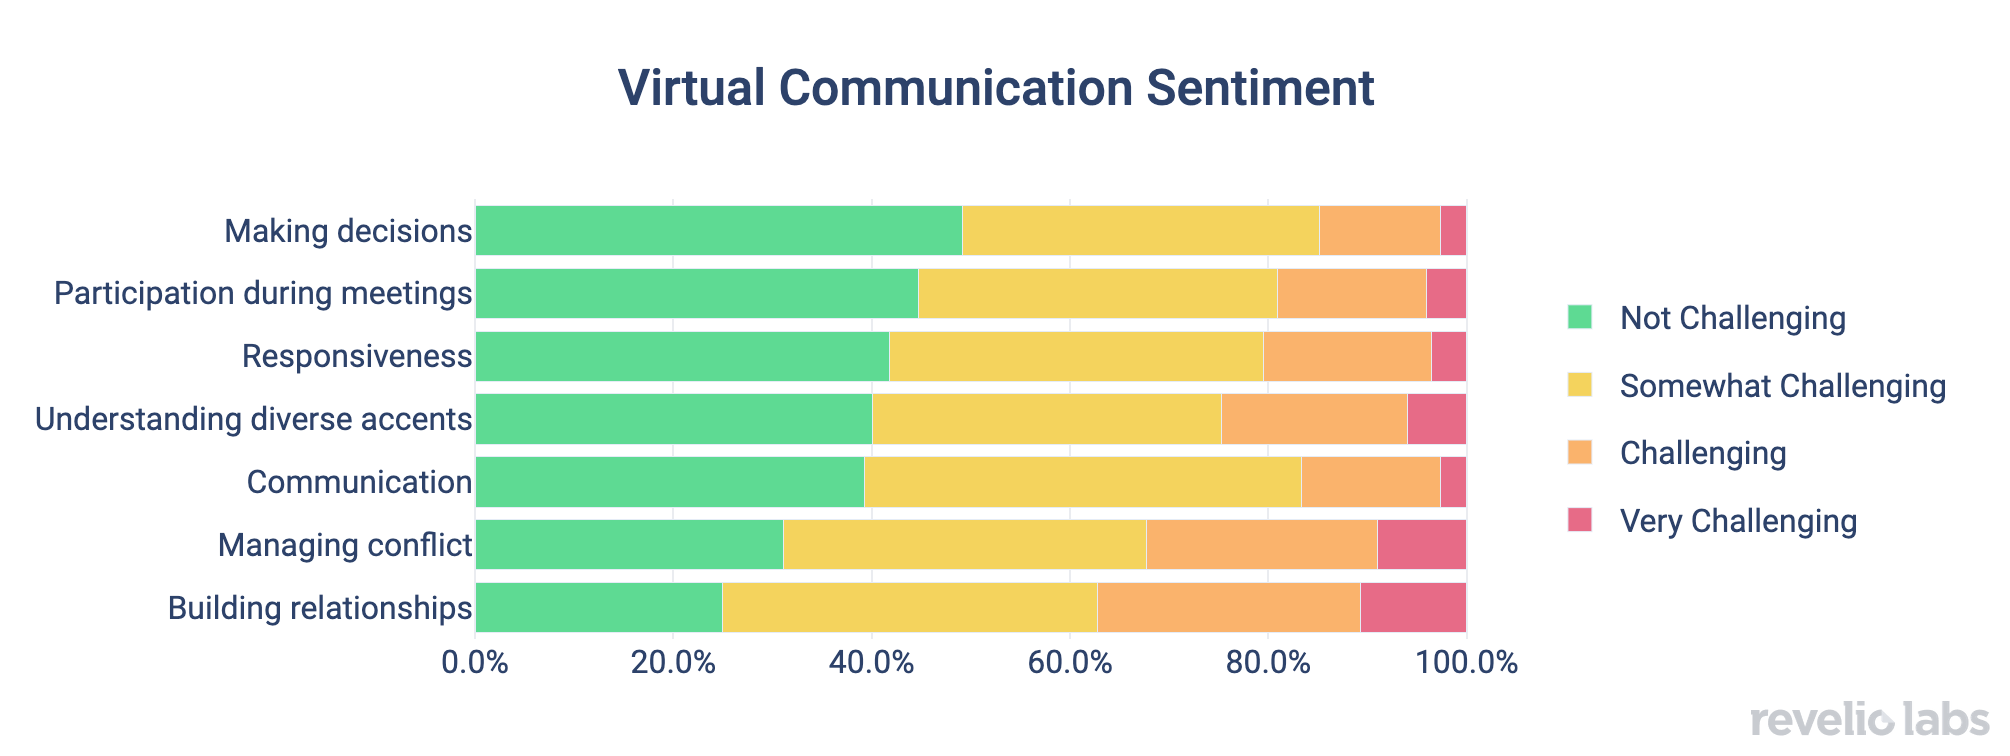 virtual-communication-sentiment